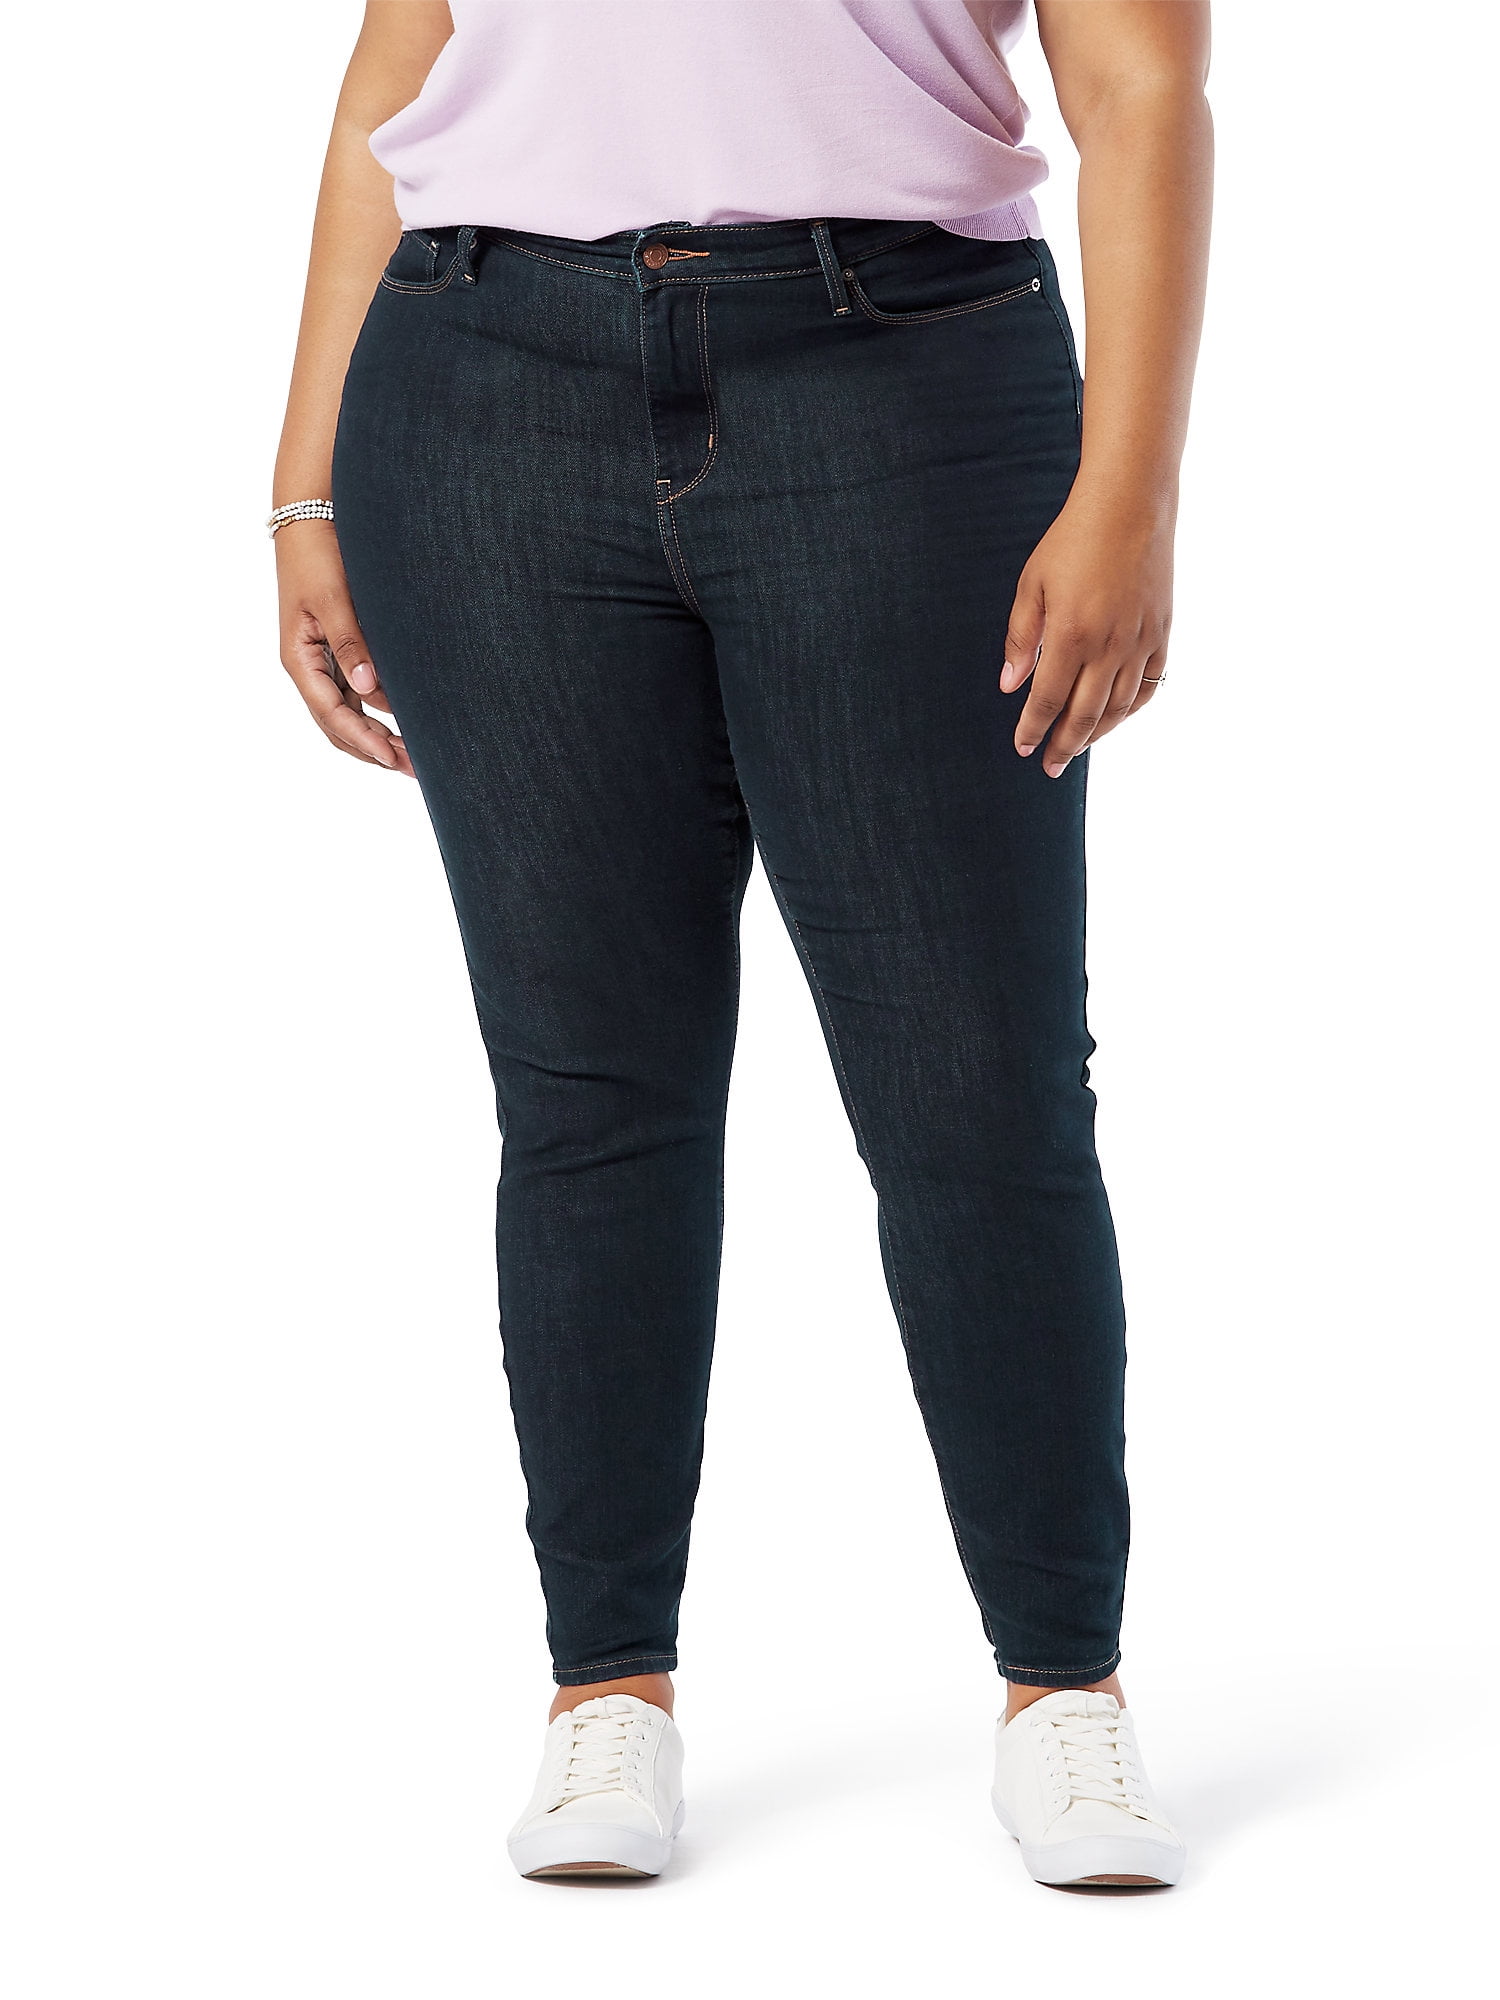 Jeans sz 14  W Ankle Plus Black  Denim Studs on  Sides Womens D 